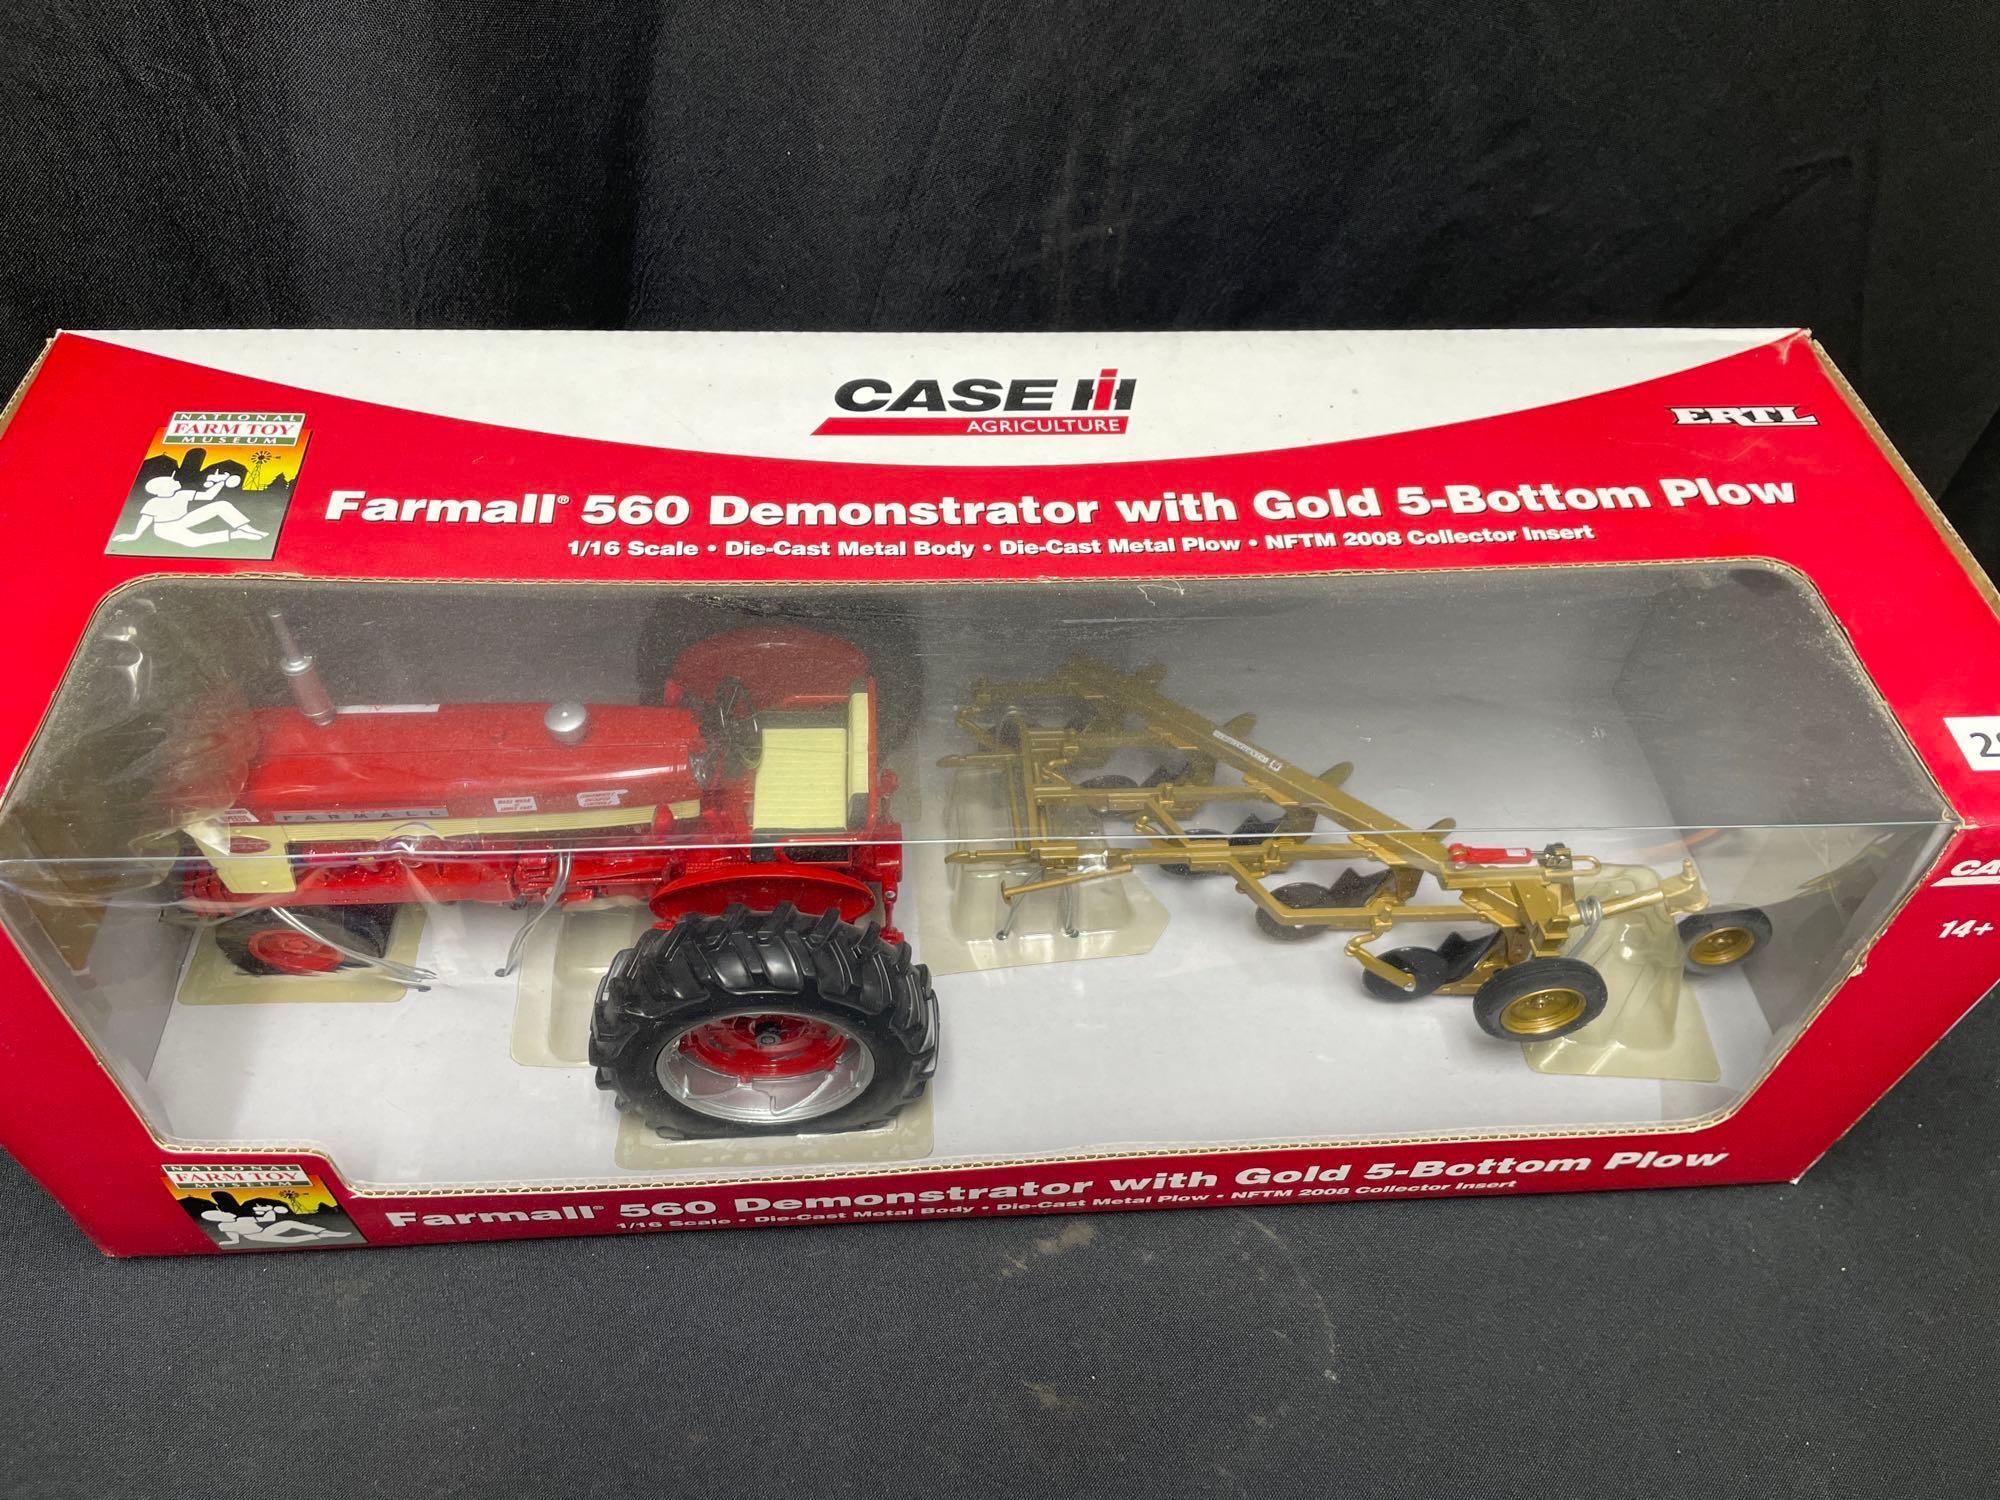 1/16th Scale Ertl National Farm Toy Museum Farmall 560 Demonstrator w/Gold 5 bottom plow - NIB